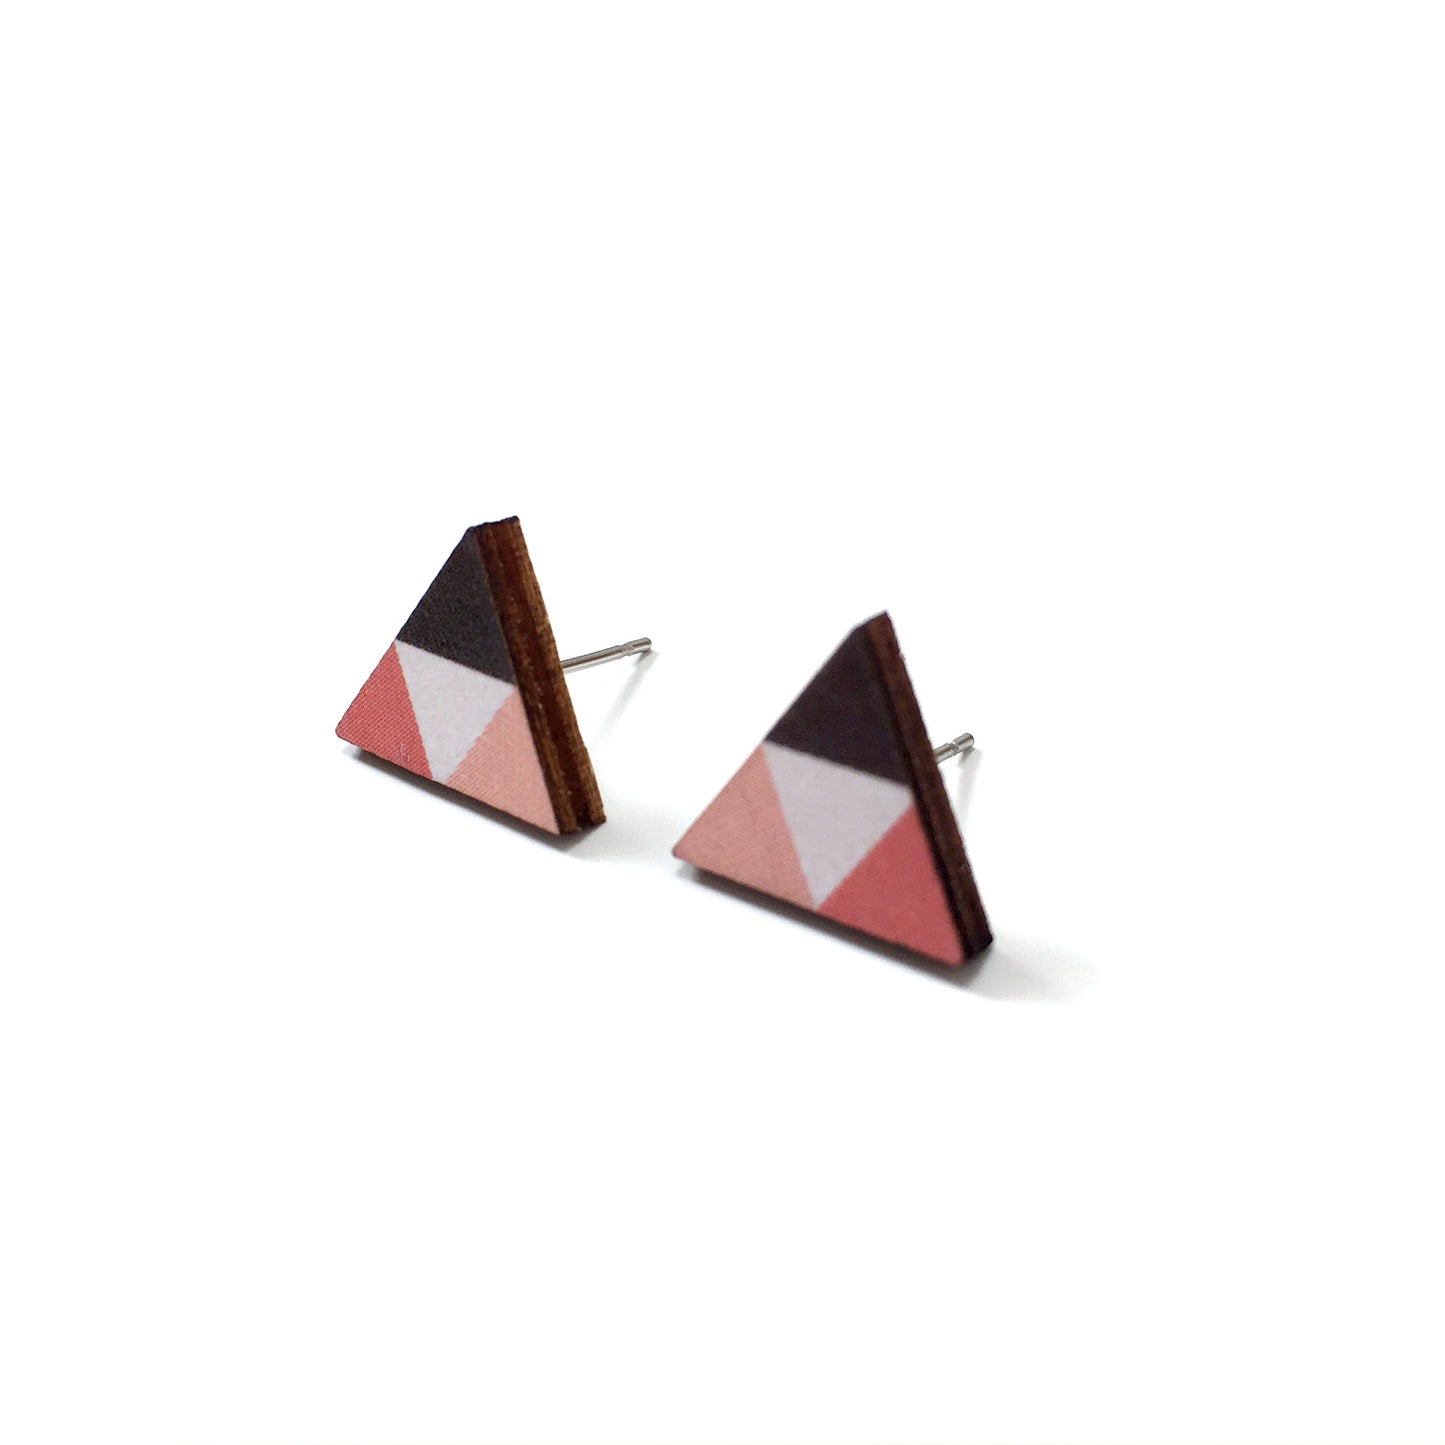 Pink triangle hexagon wooden stud earrings